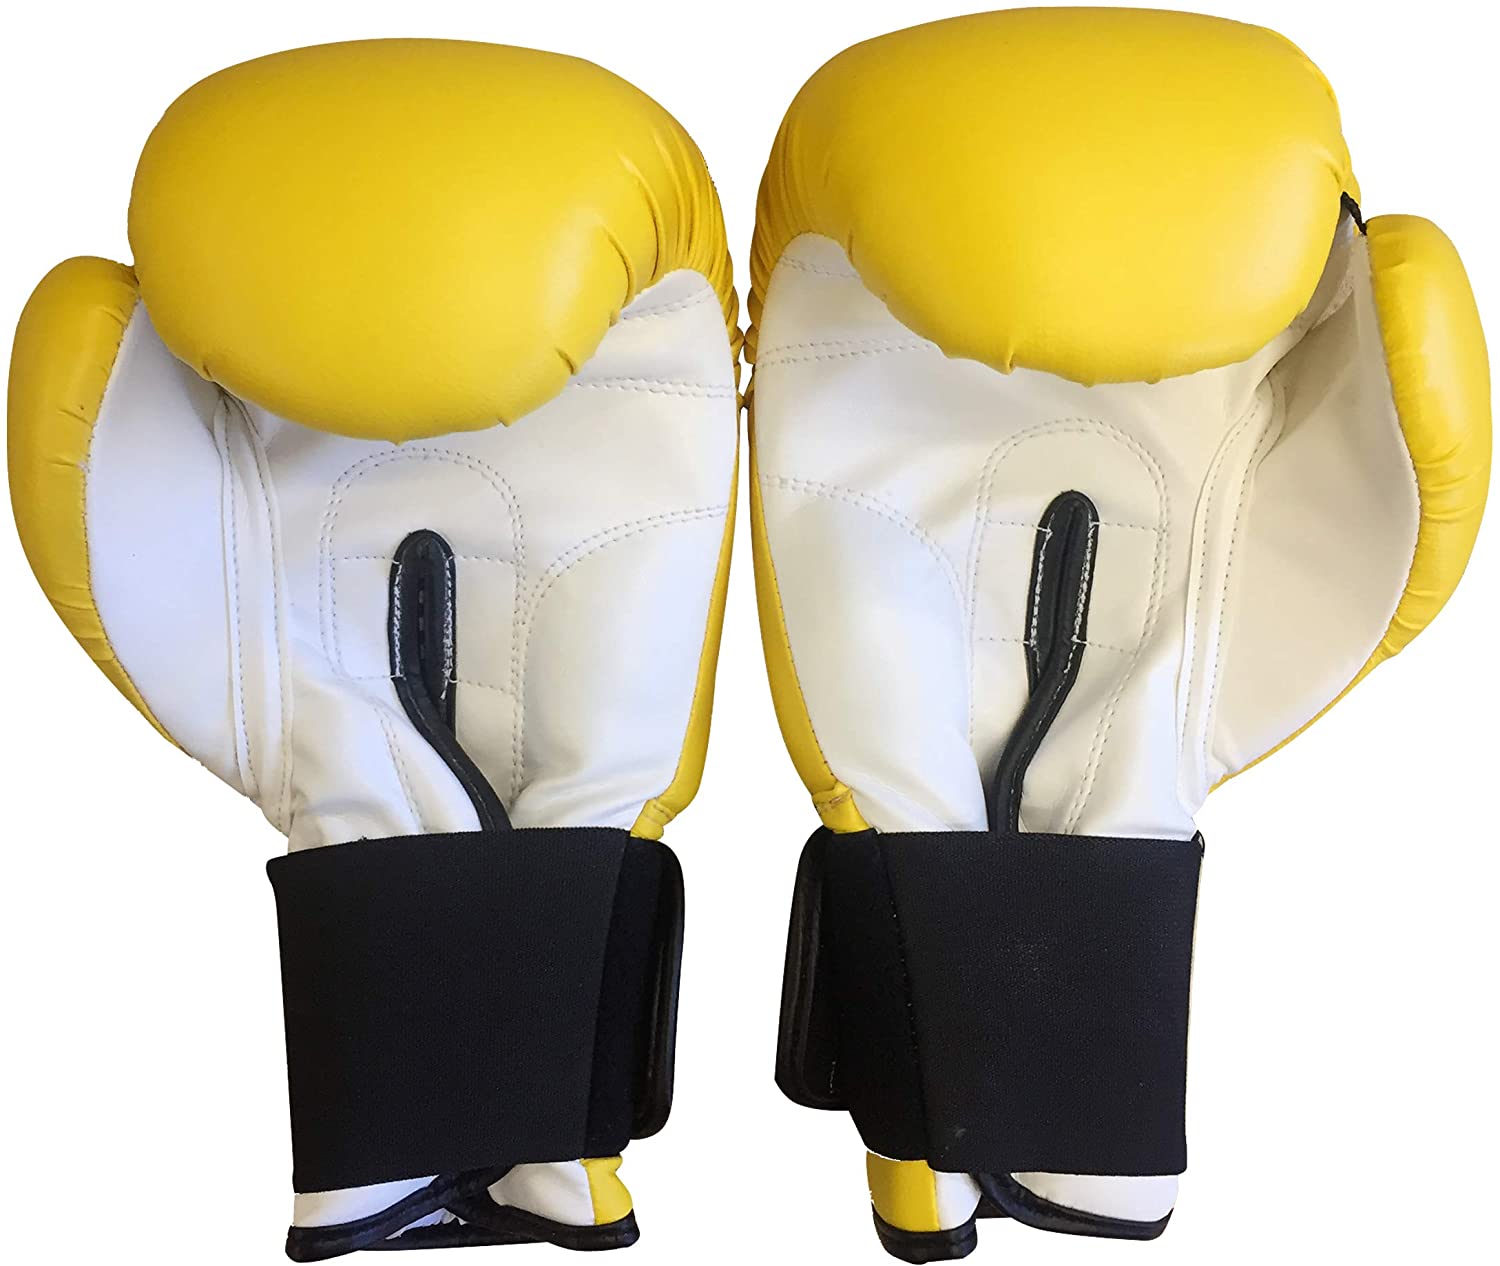 Woldorf USA Boxing gloves punching bag training fighting kickboxing sport yellow 